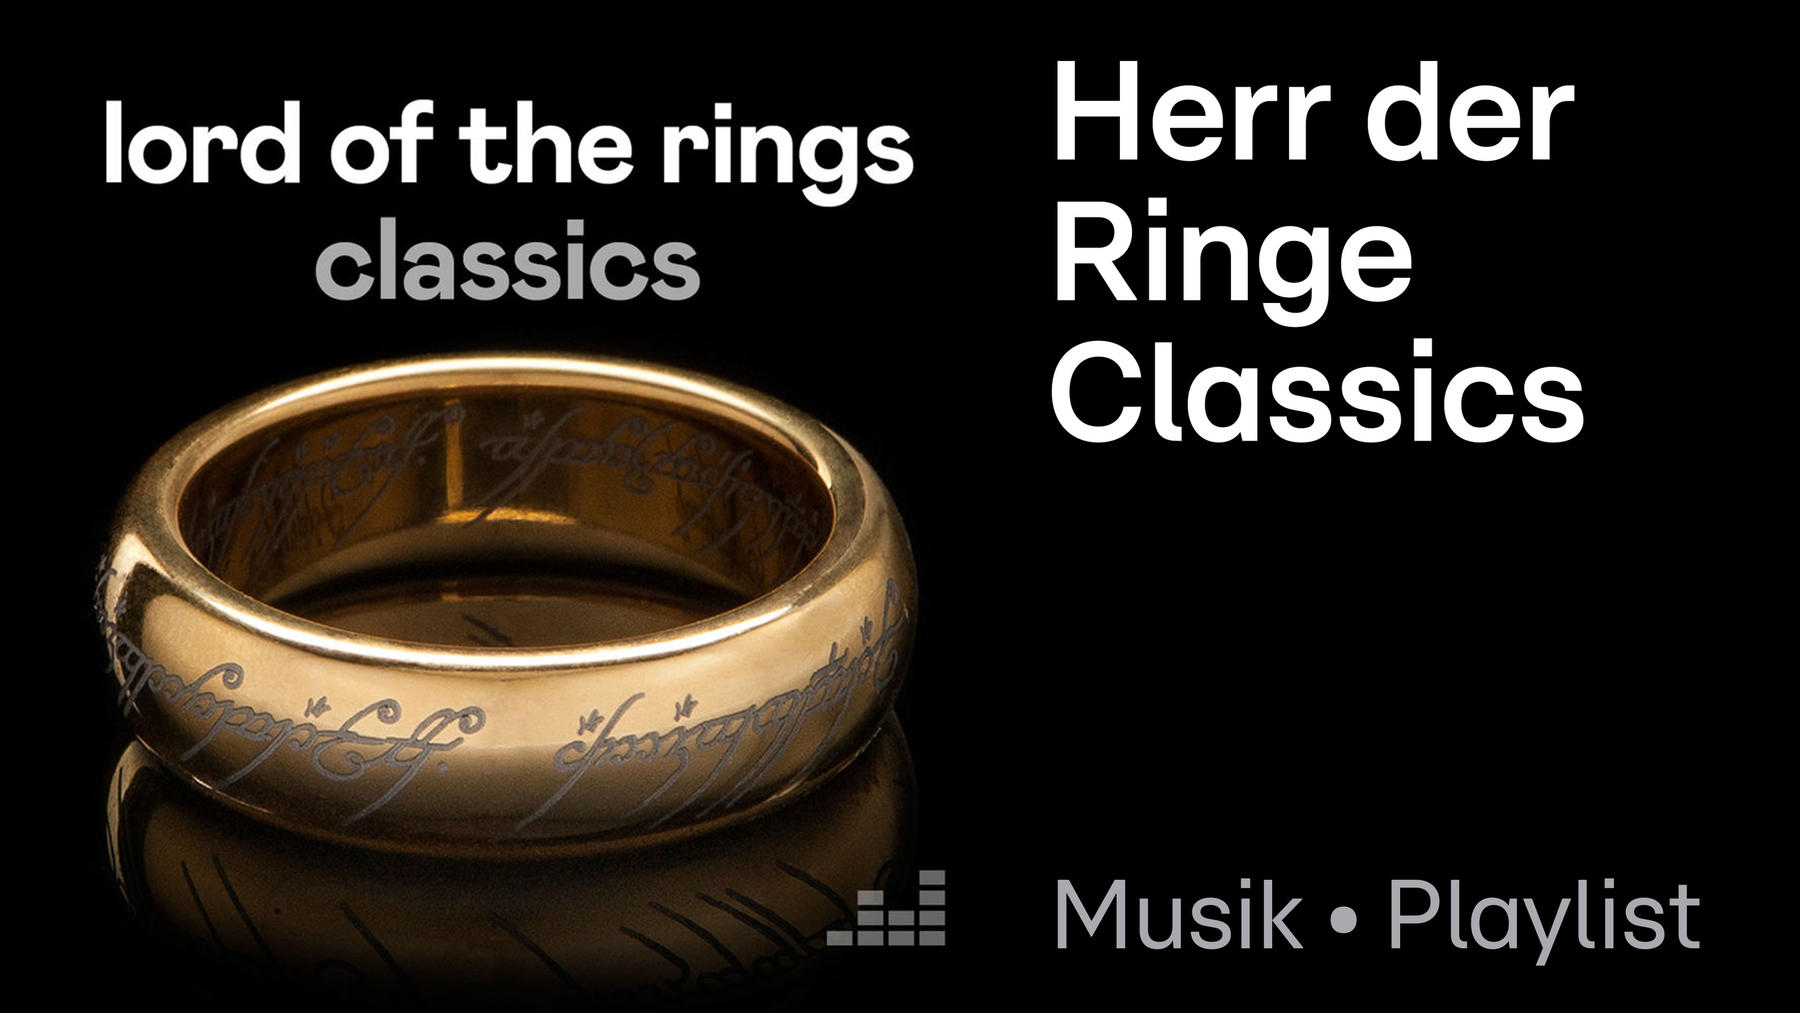 Herr der Ringe Classics Playlist